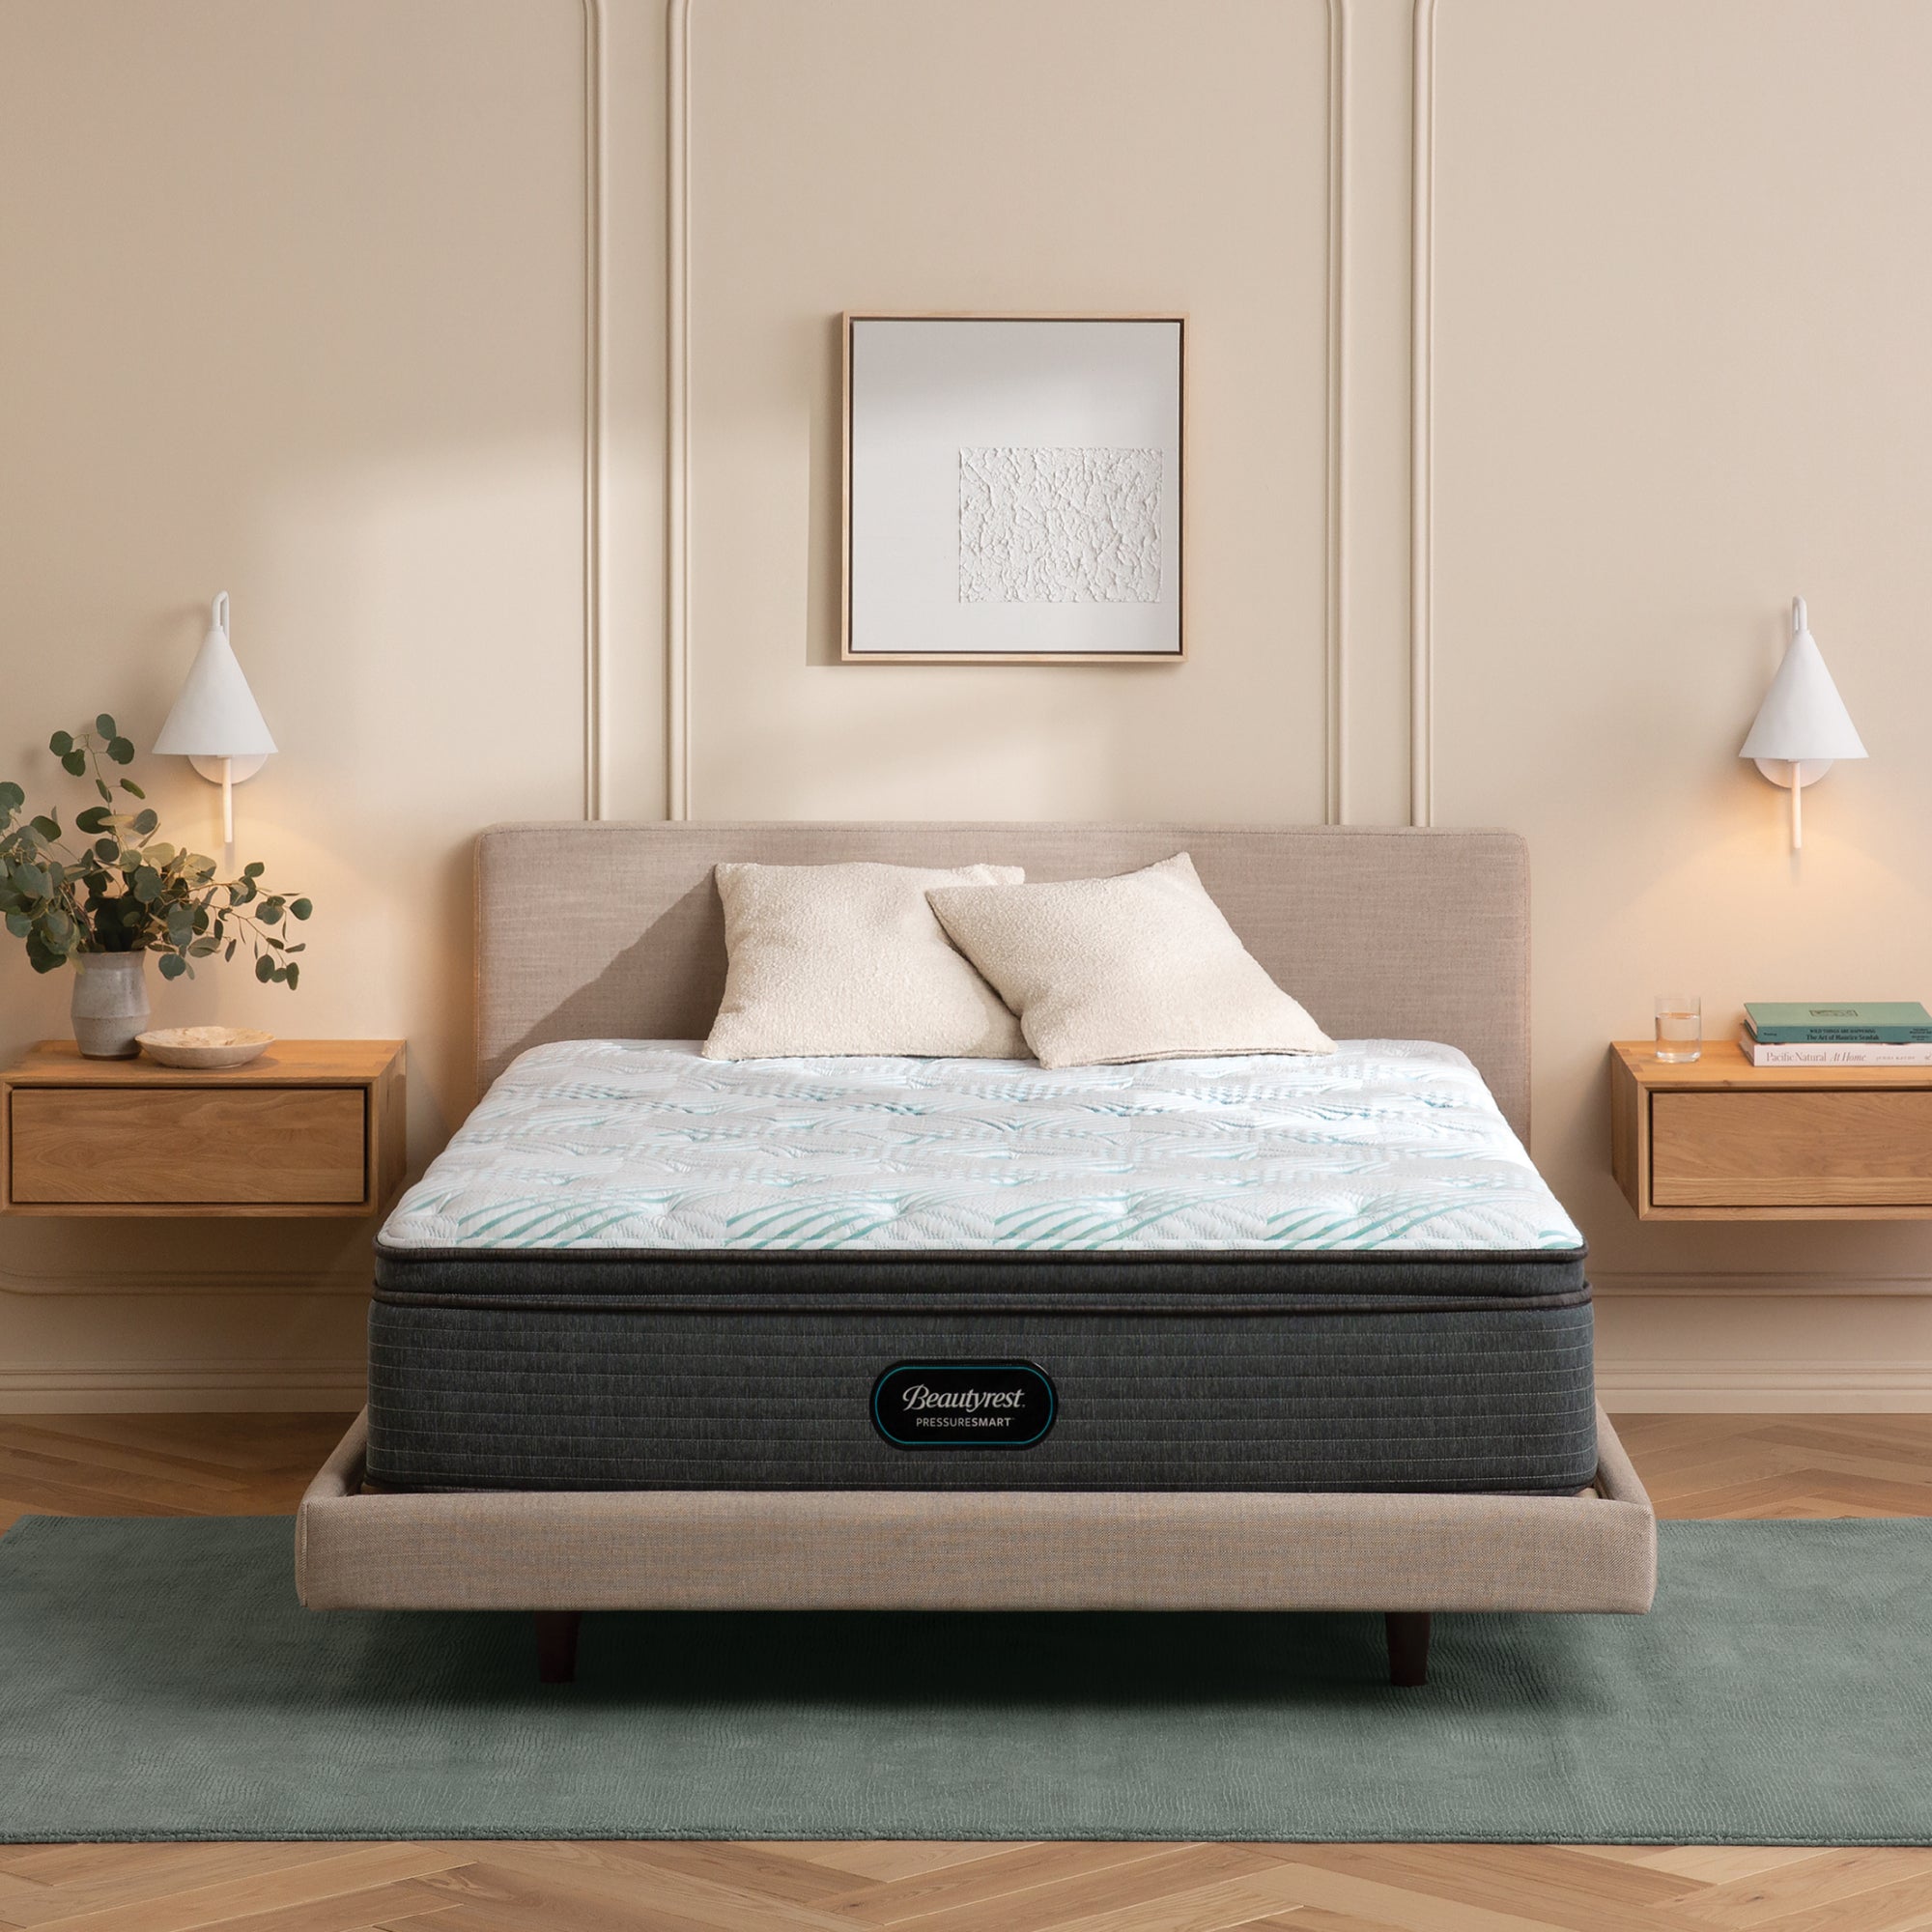 The Beautyrest PressureSmart mattress in a bedroom||feel: plush pillow top||series: standard